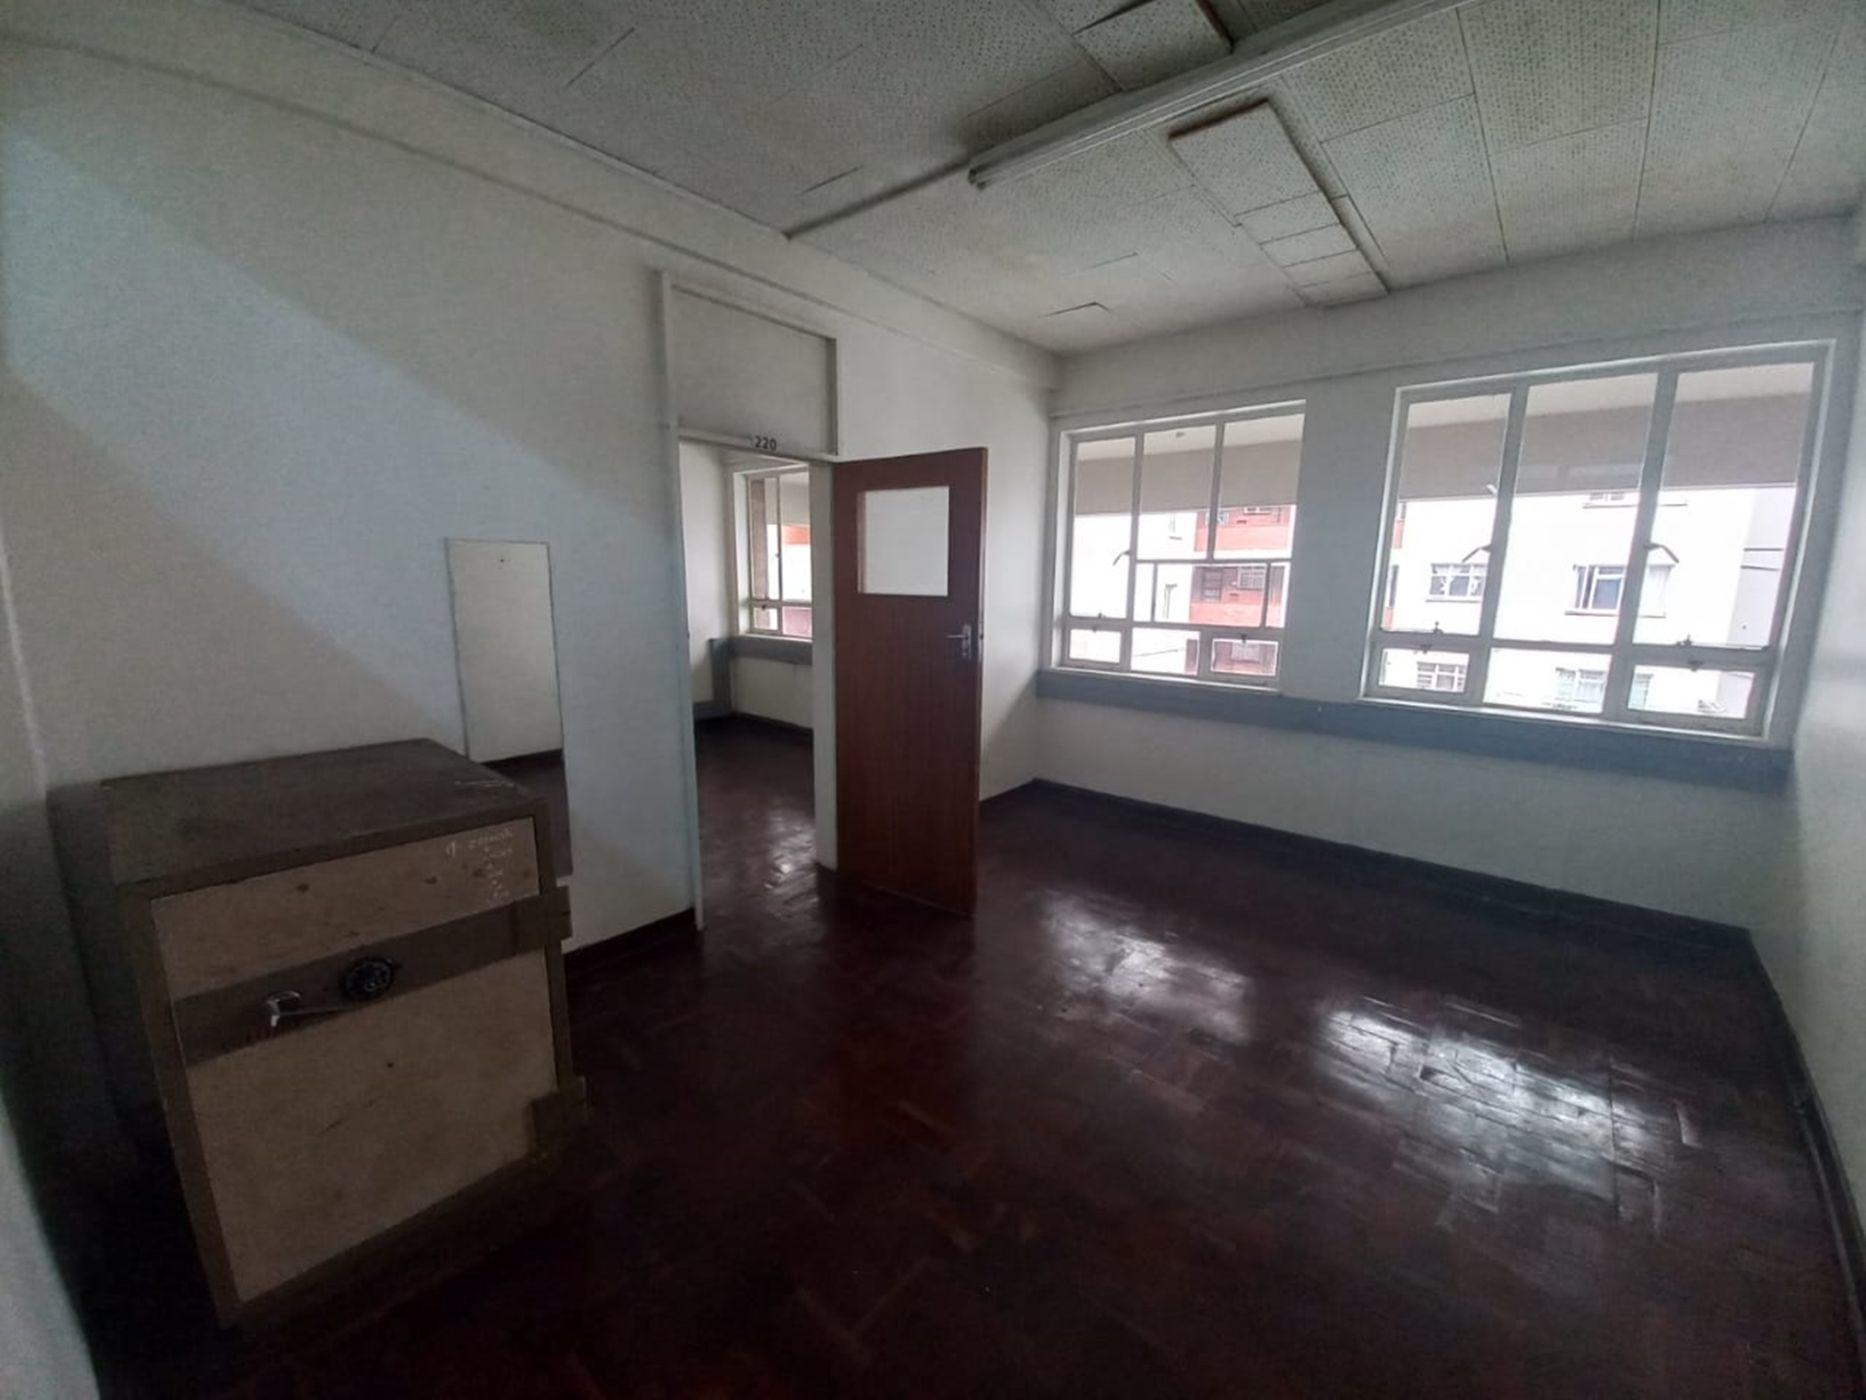 Rooms to rent in Durban - Rooms 2 Rent